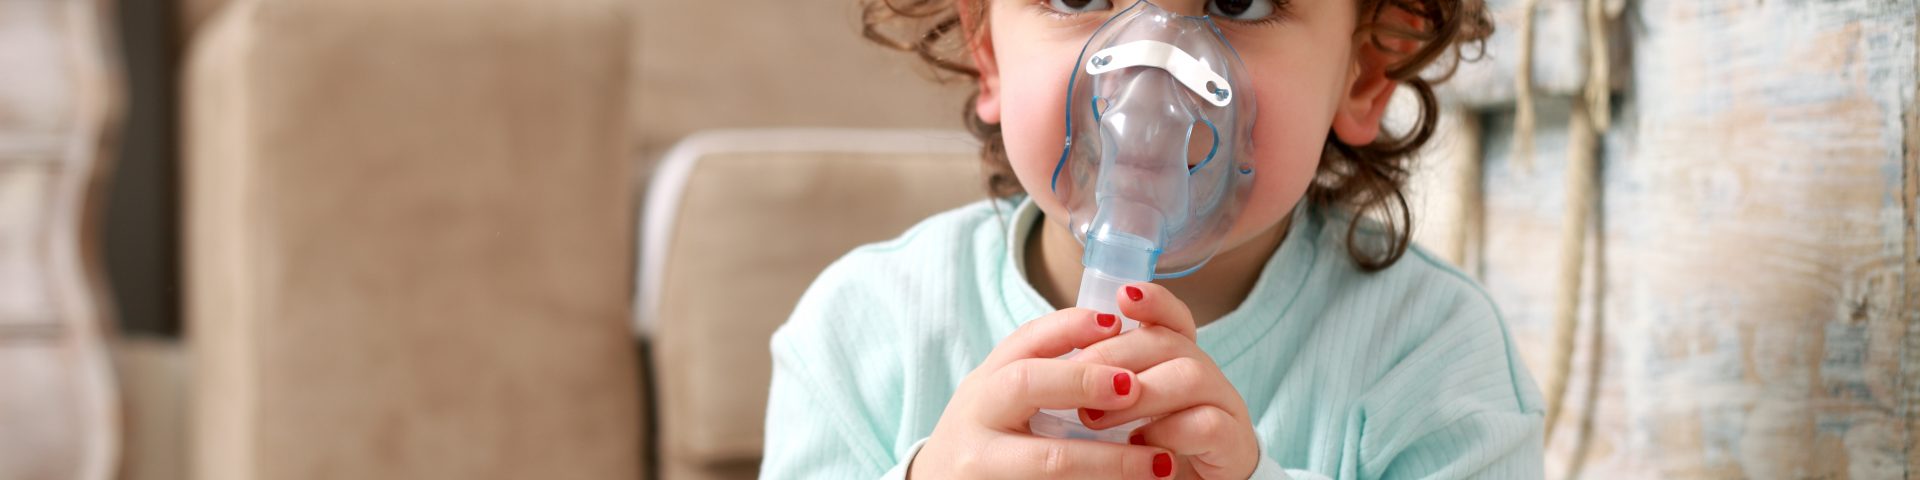 child with ventilator